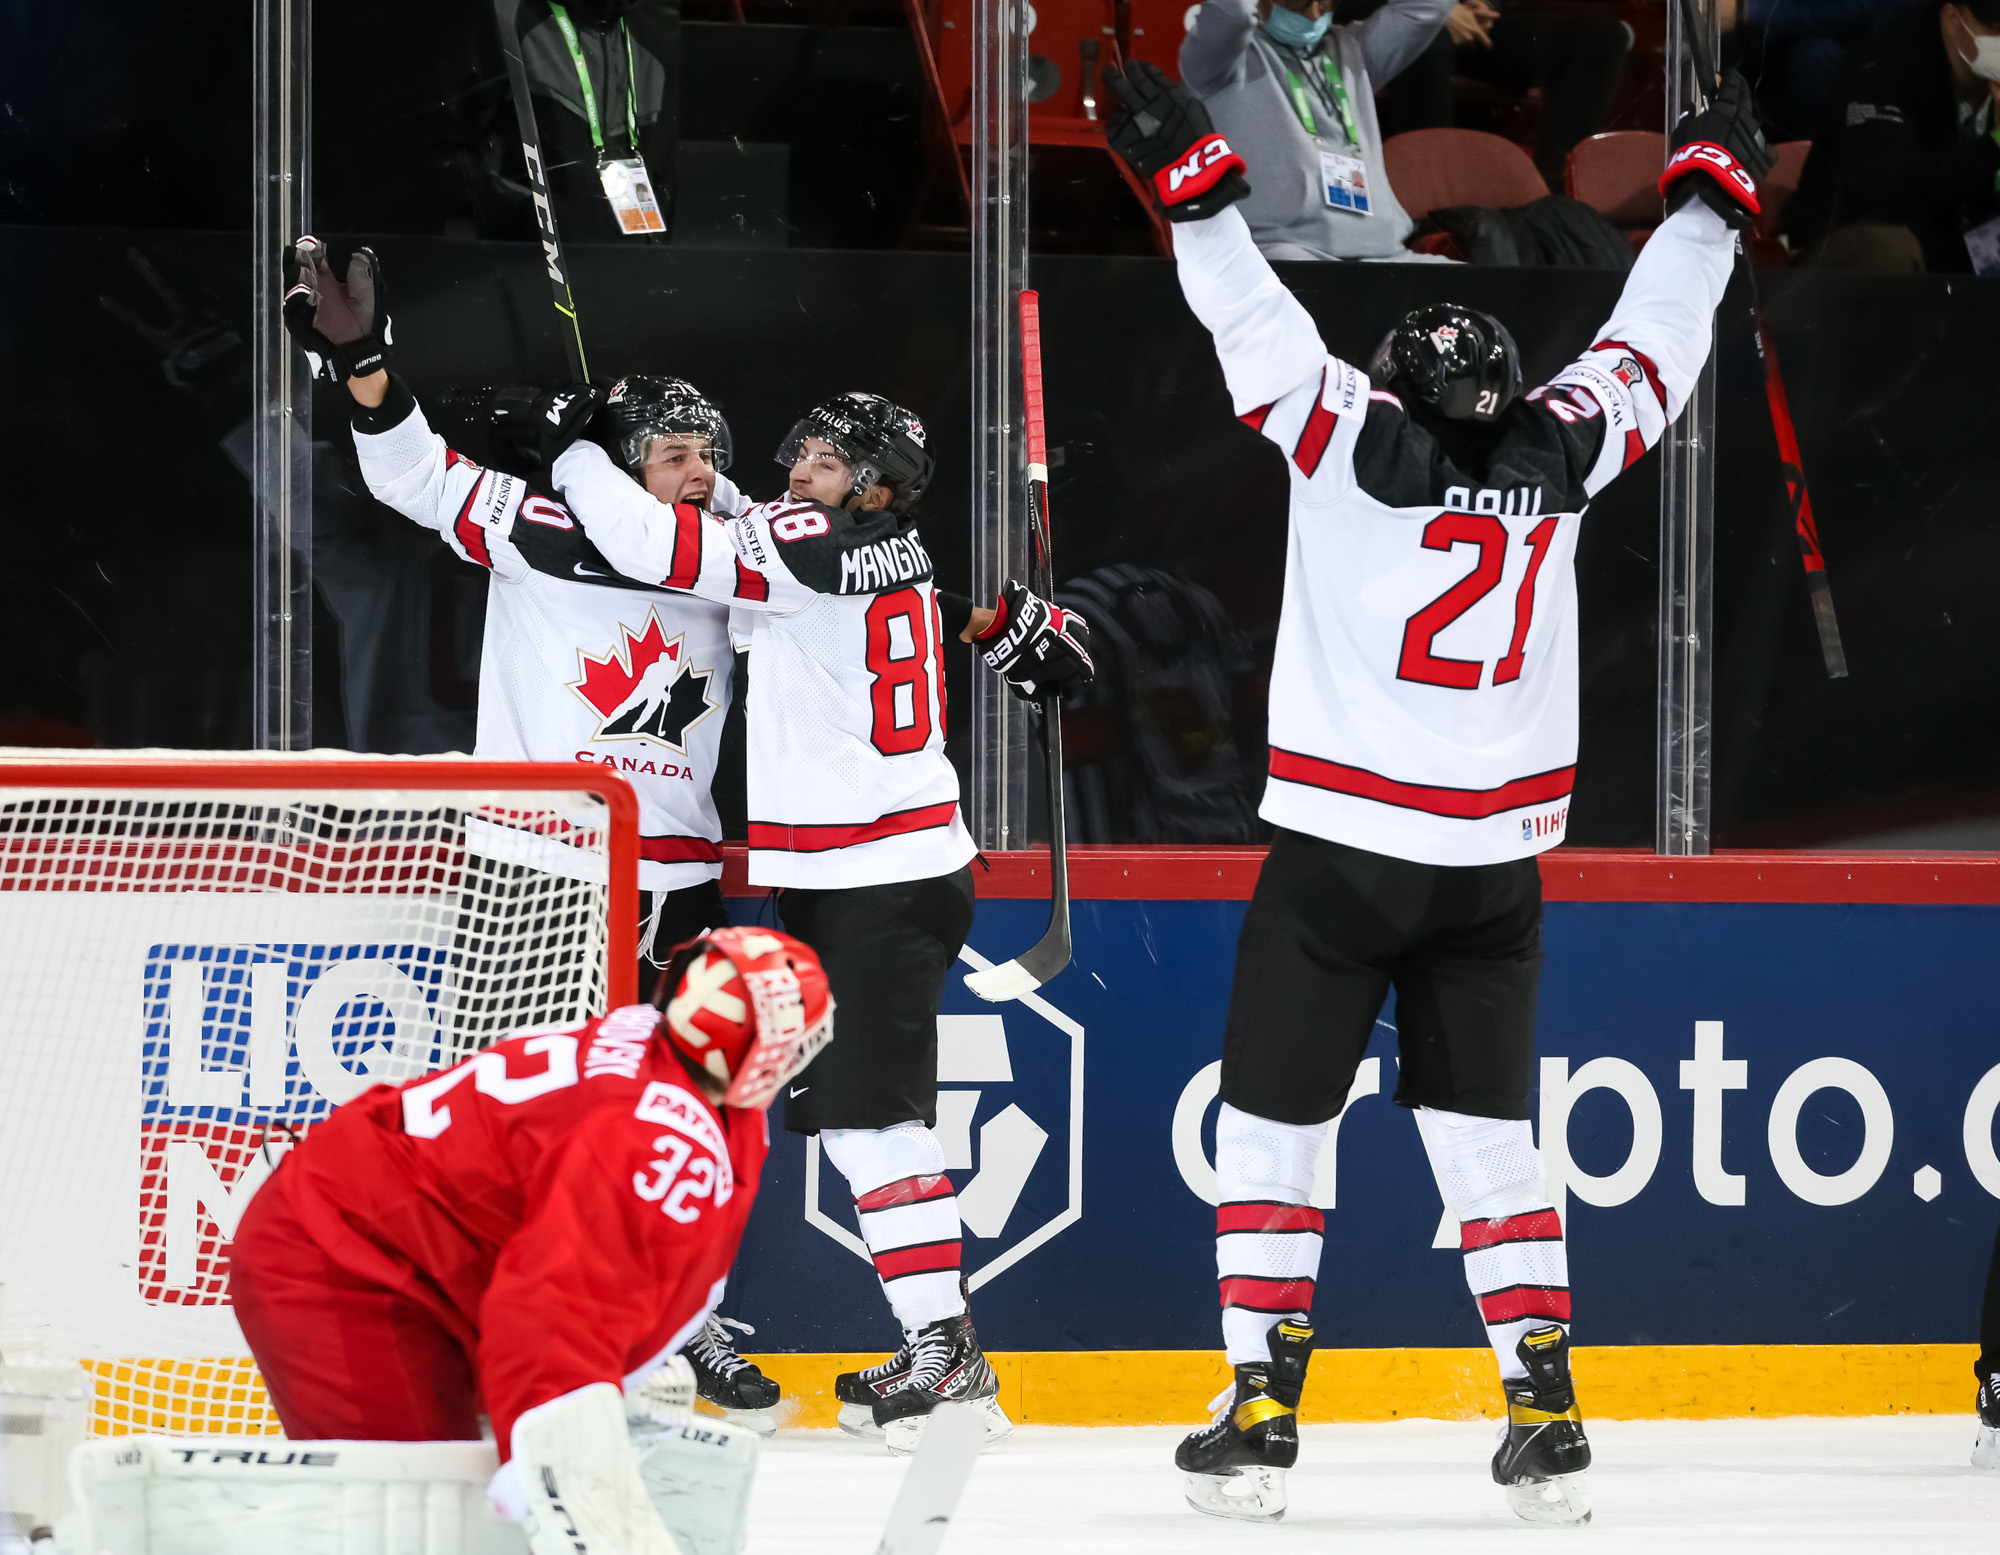 Flames' Mangiapane honoured to represent Canada at world hockey championship